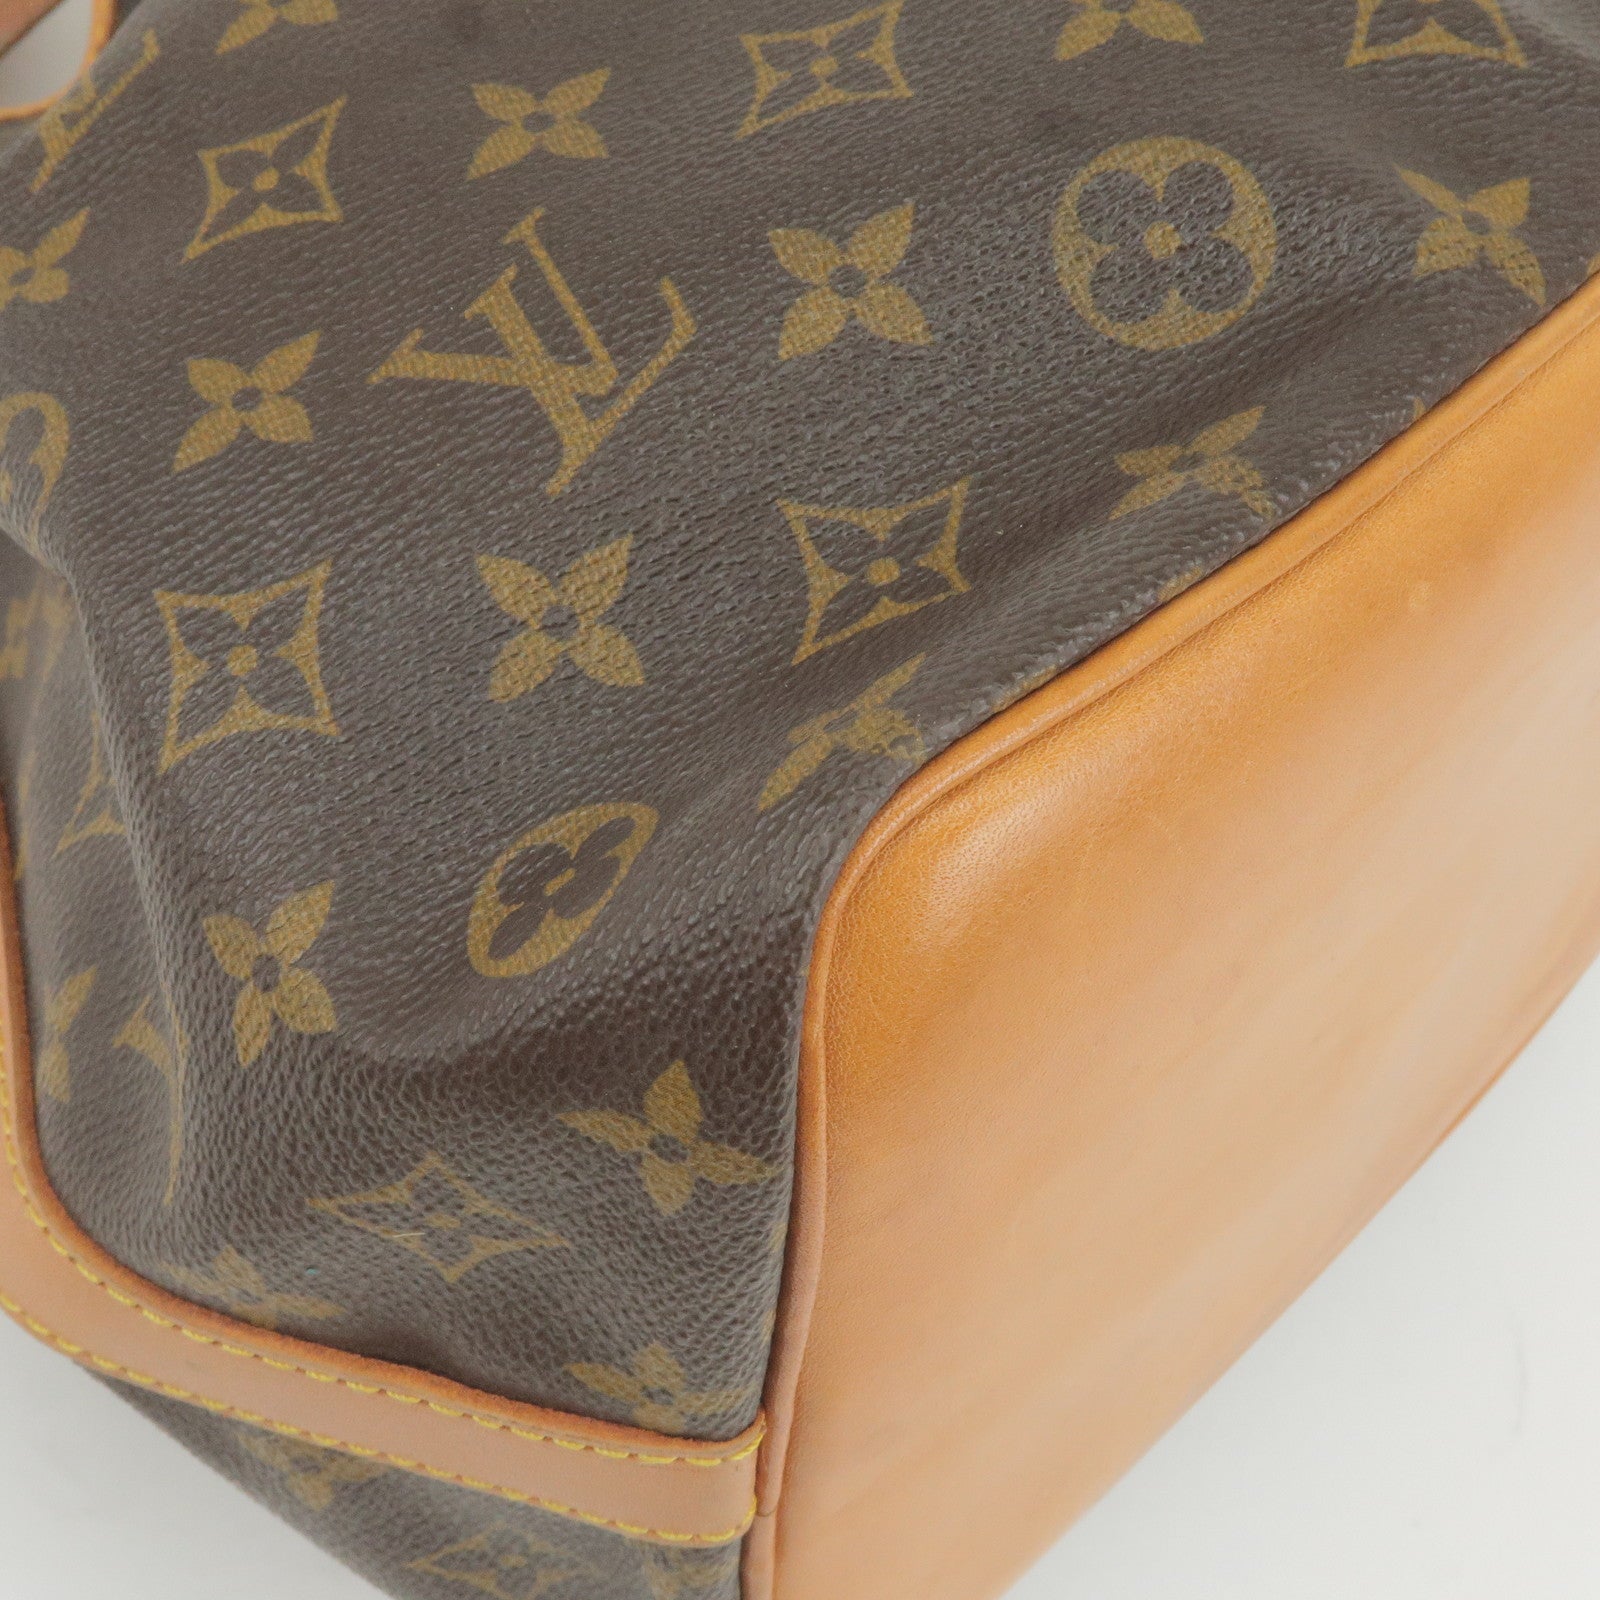 Louis Vuitton Monogram Midnight Shoulder Bags for Women